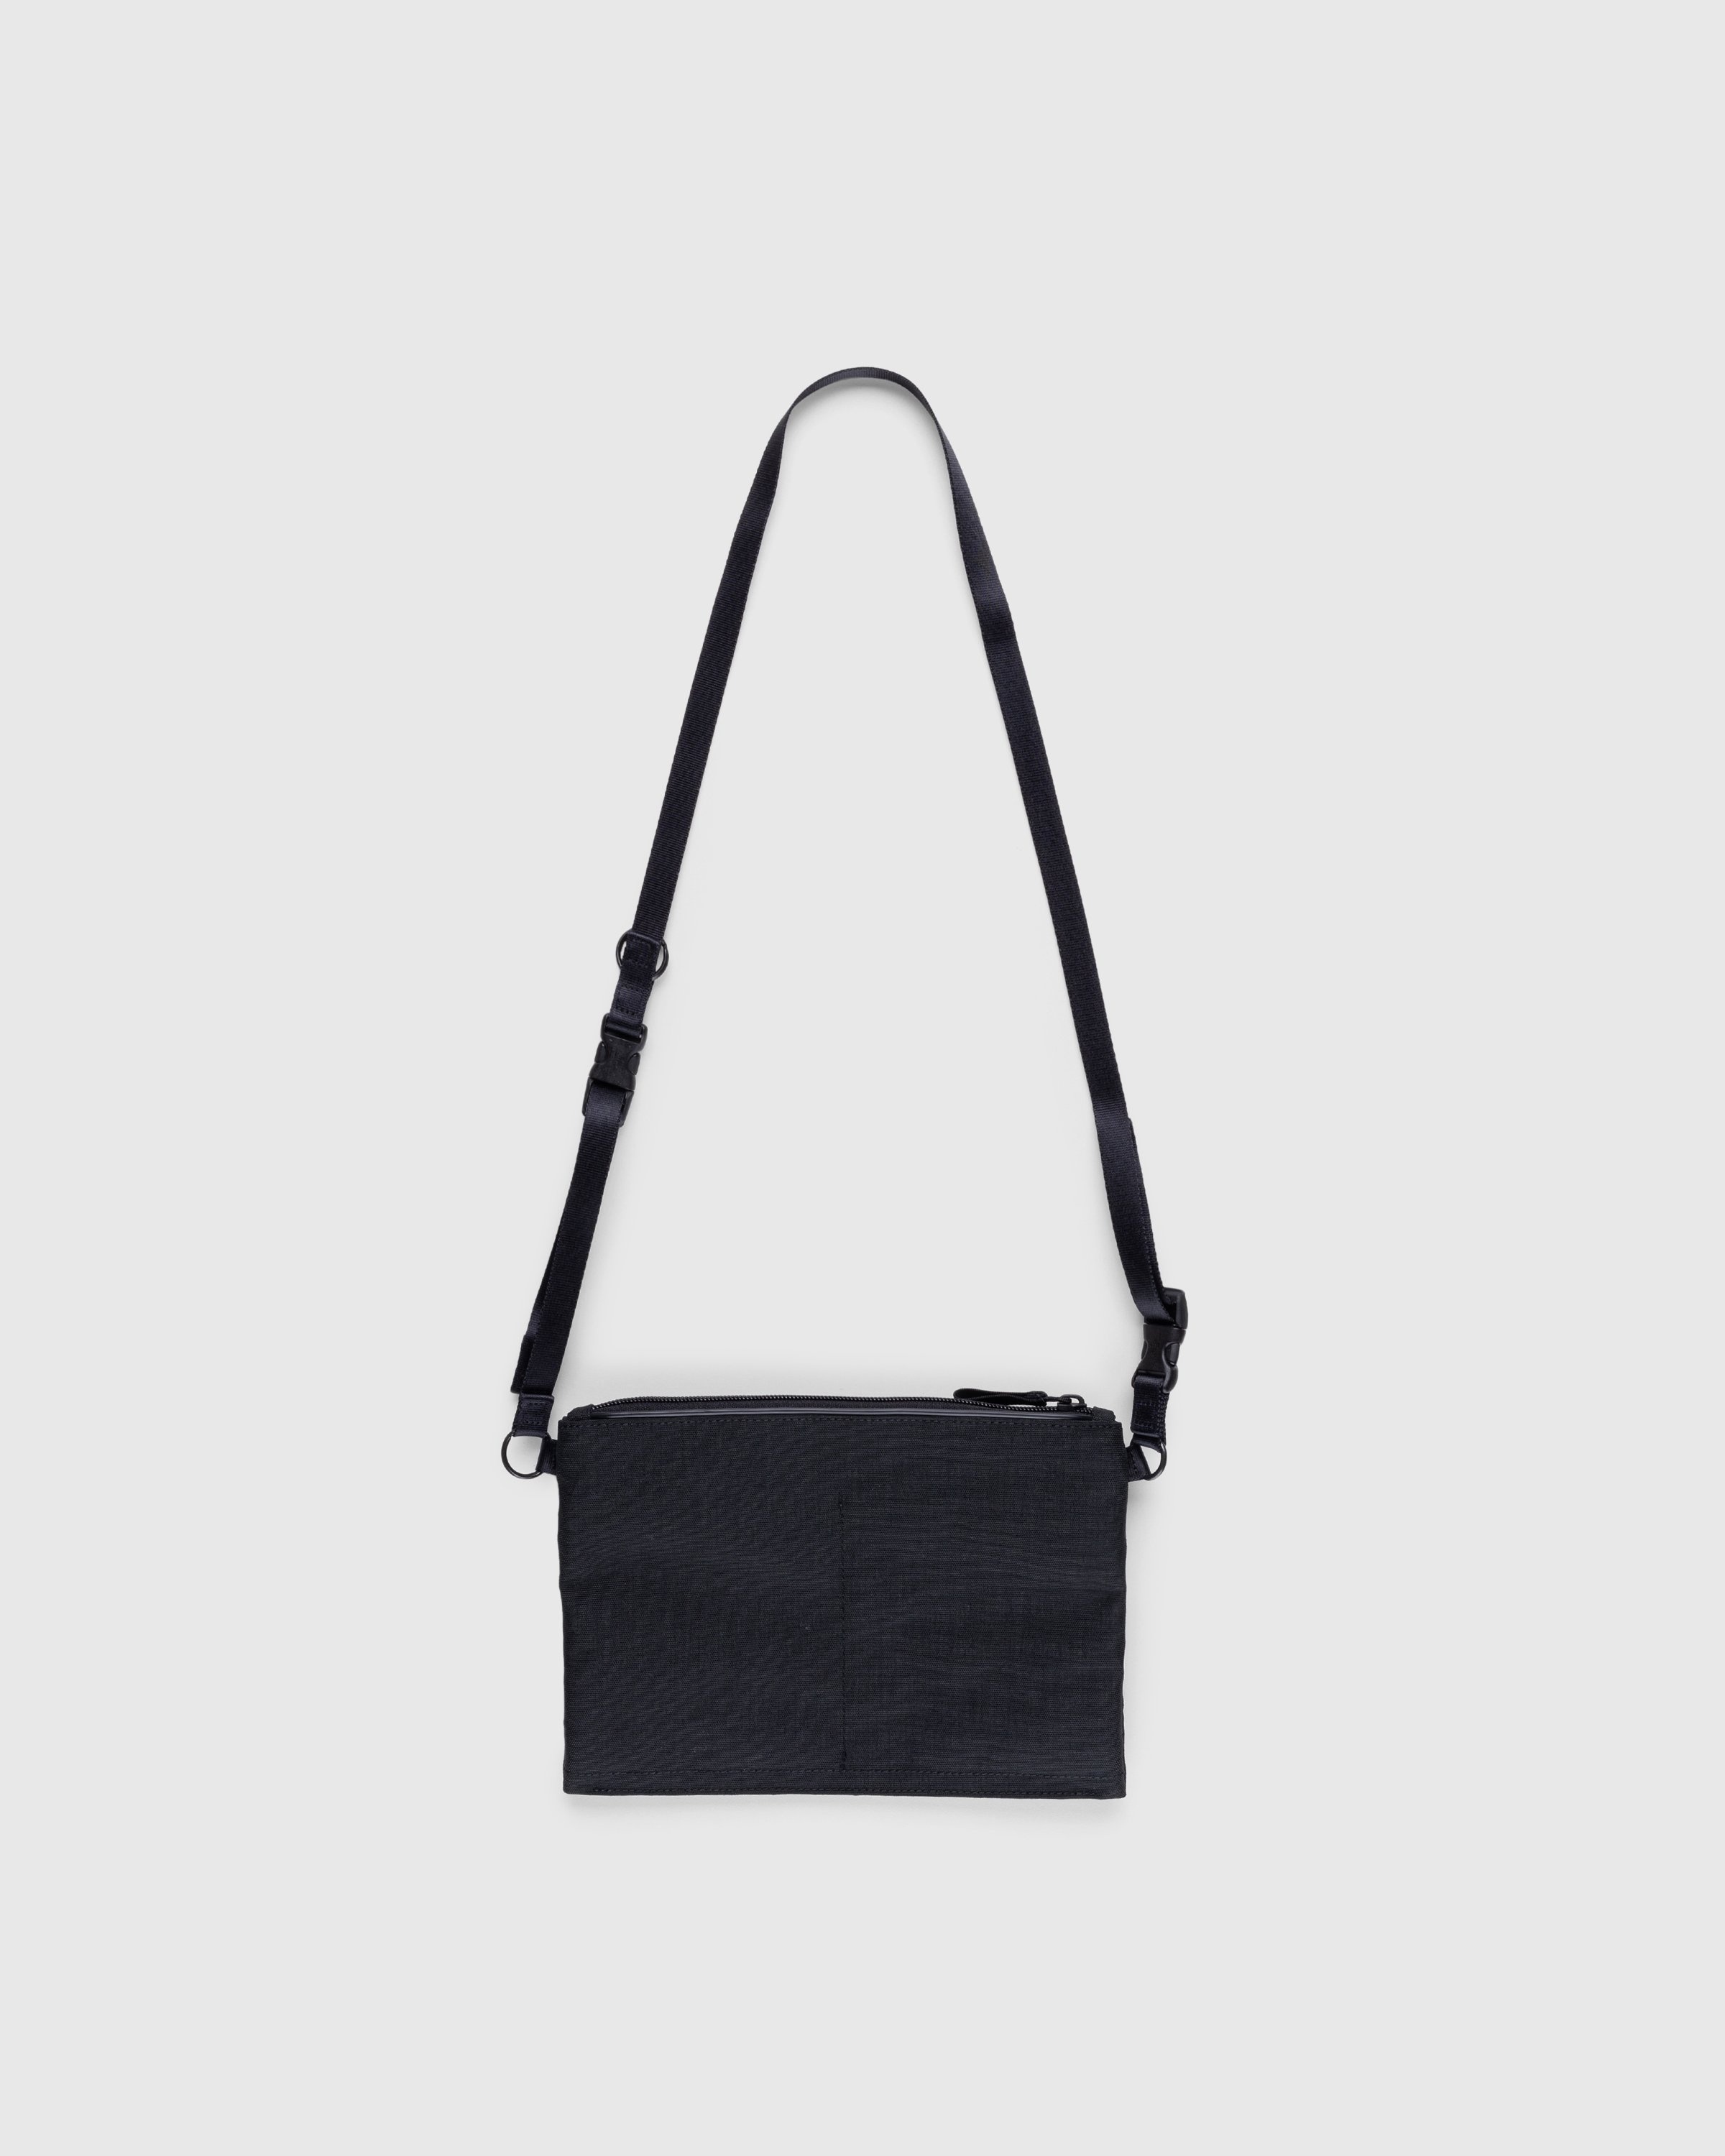 Porter-Yoshida & Co. – Sacoche Hybrid Shoulder Bag Black 